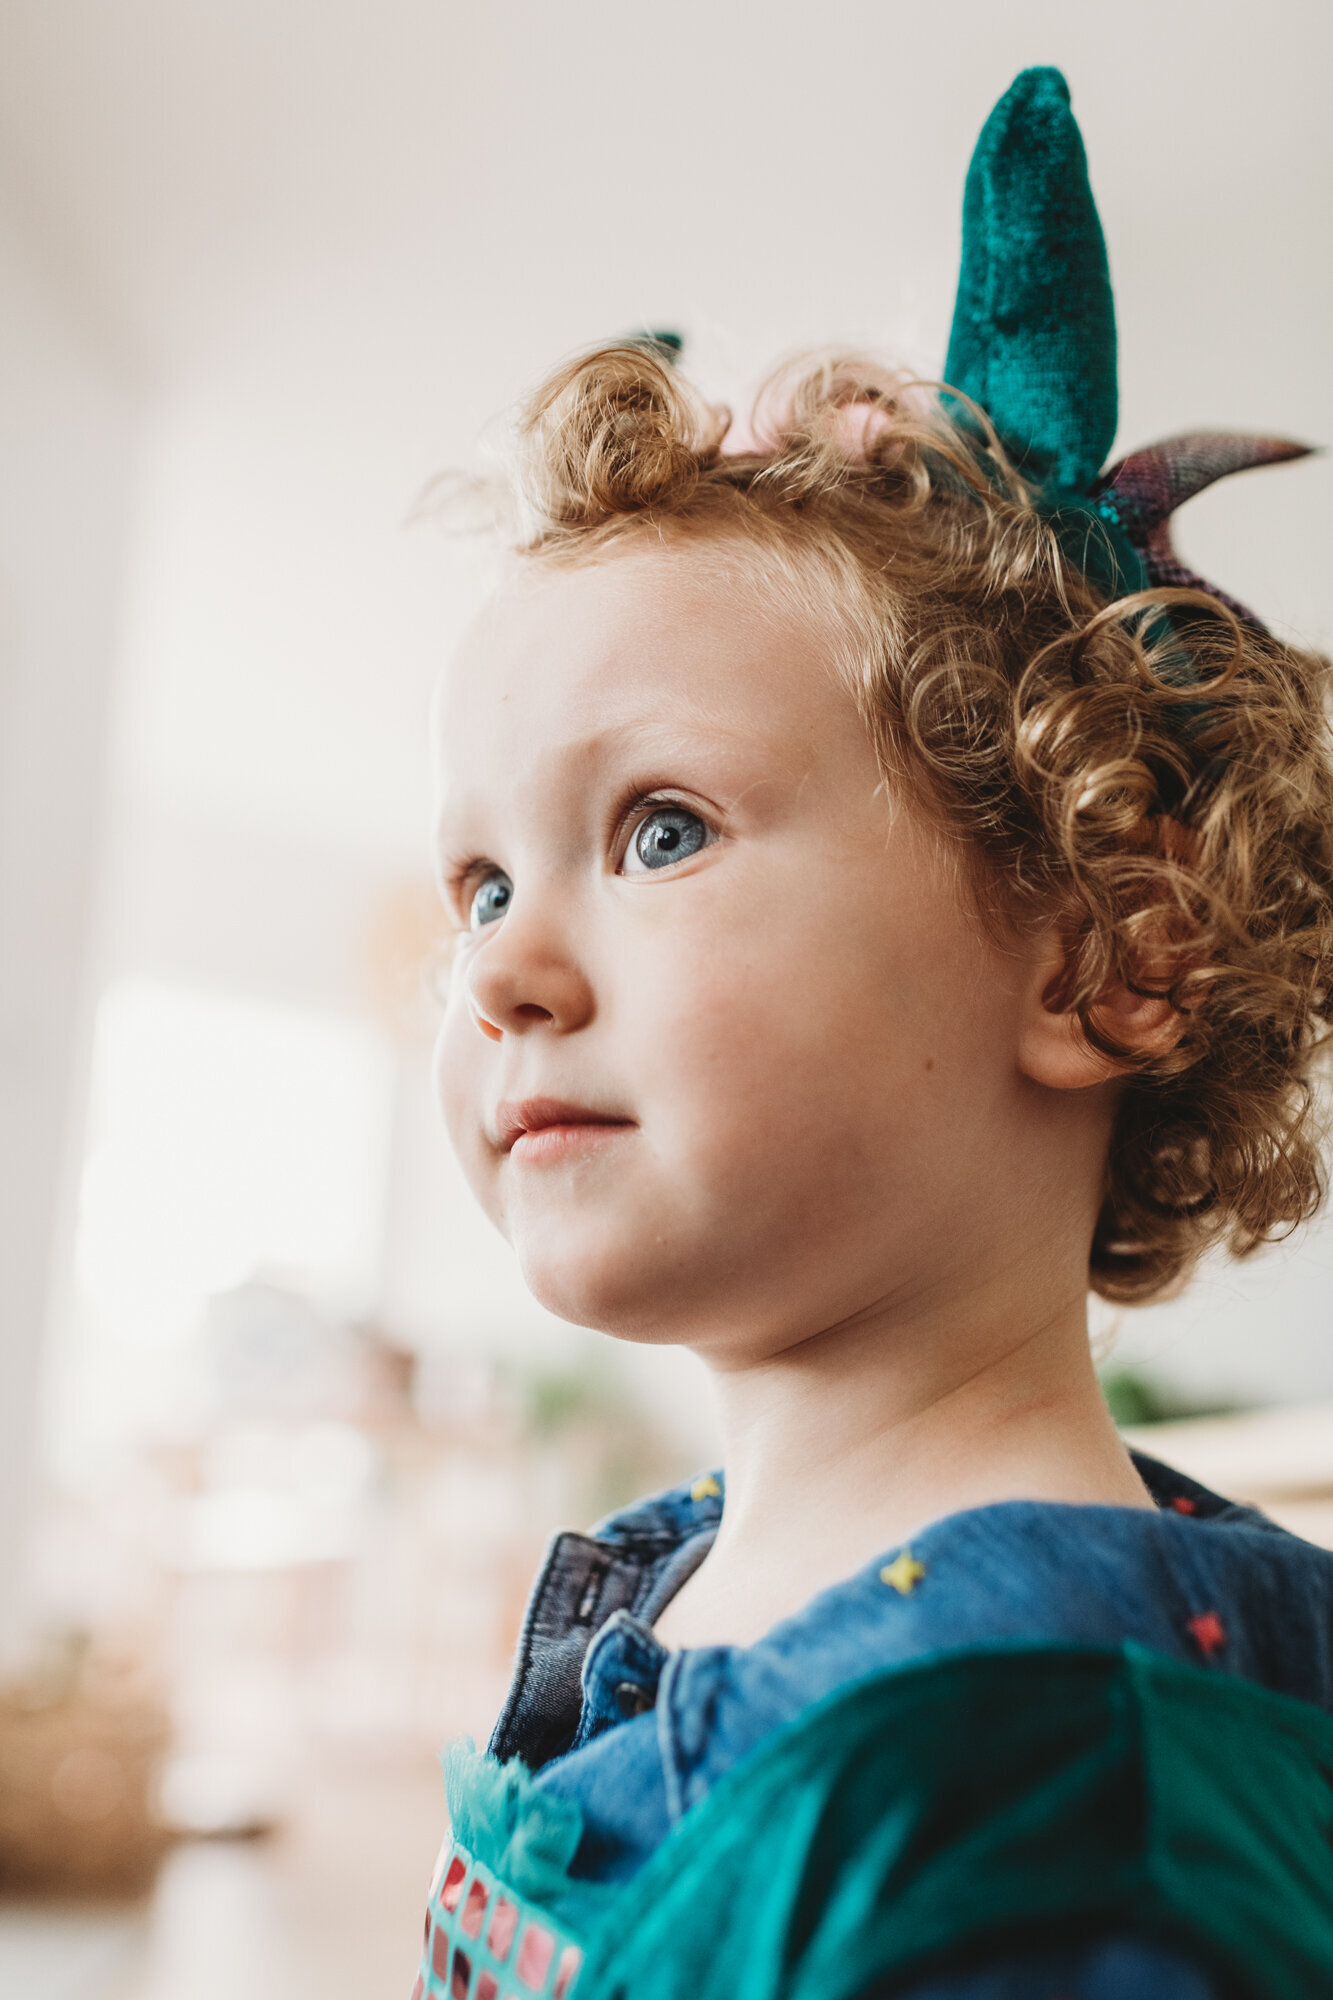 Branding Photographer, a little girl wears a head band and velvet overalls